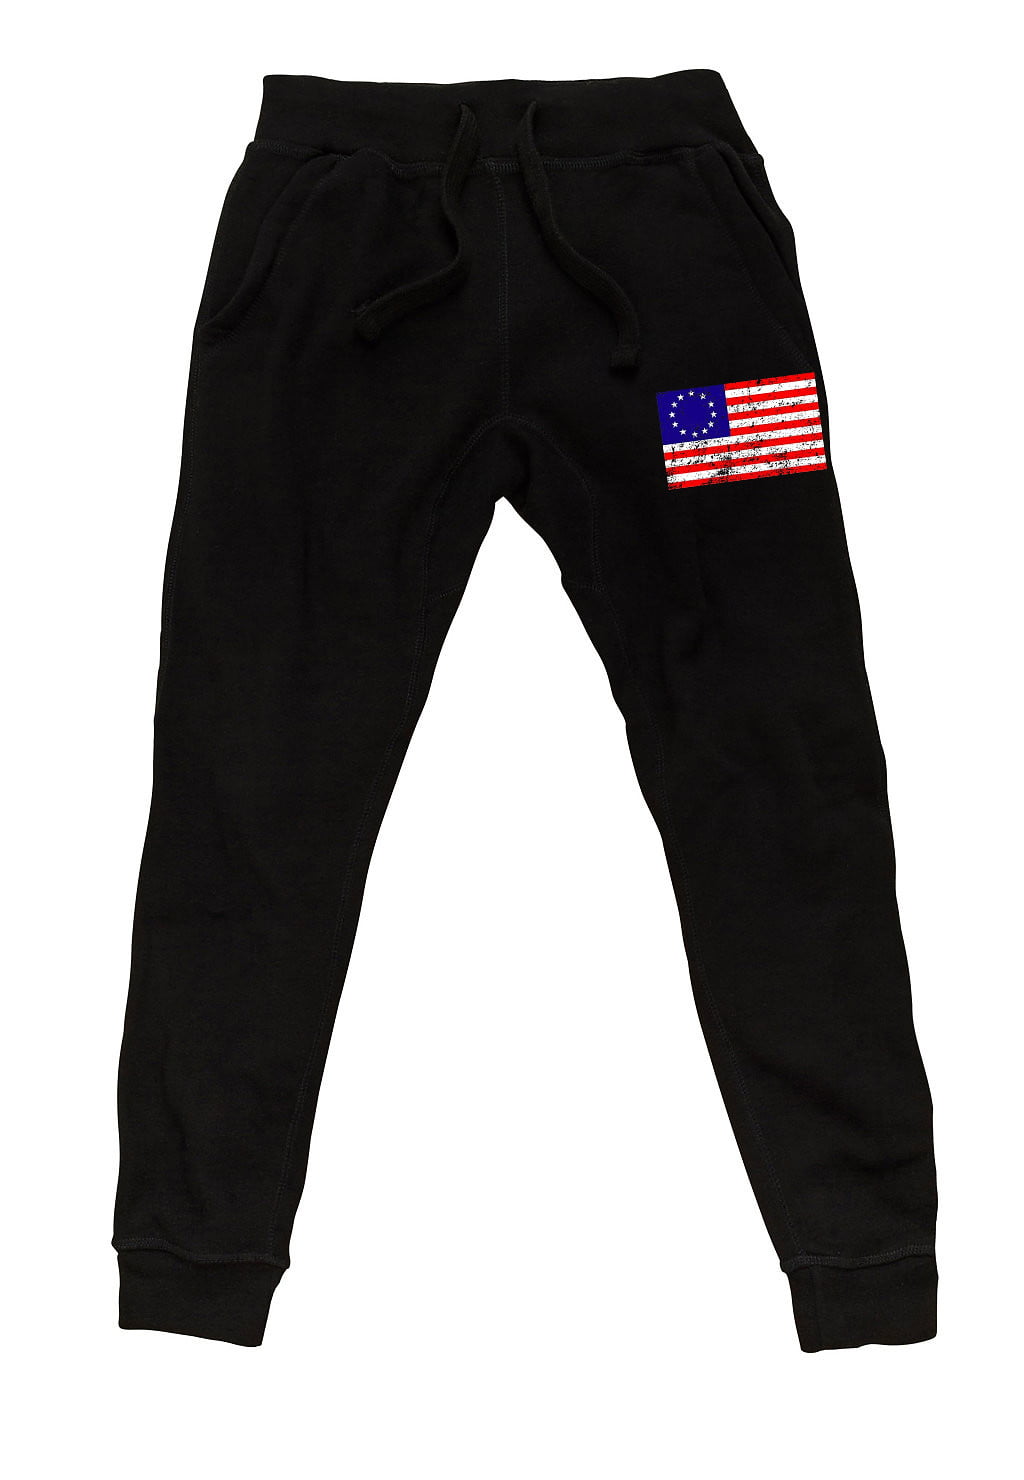 Men's Chest Betsy Ross US Flag Black Fleece Gym Jogger Sweatpants 2X ...